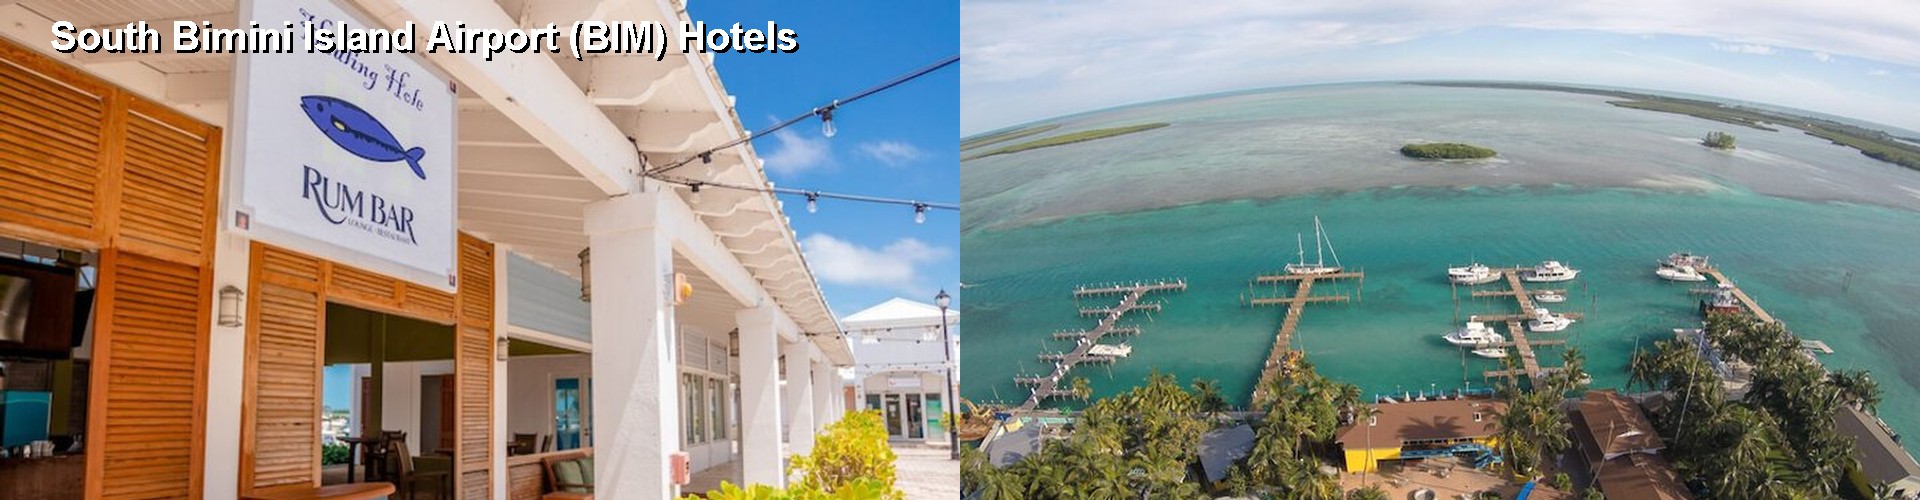 4 Best Hotels near South Bimini Island Airport (BIM)